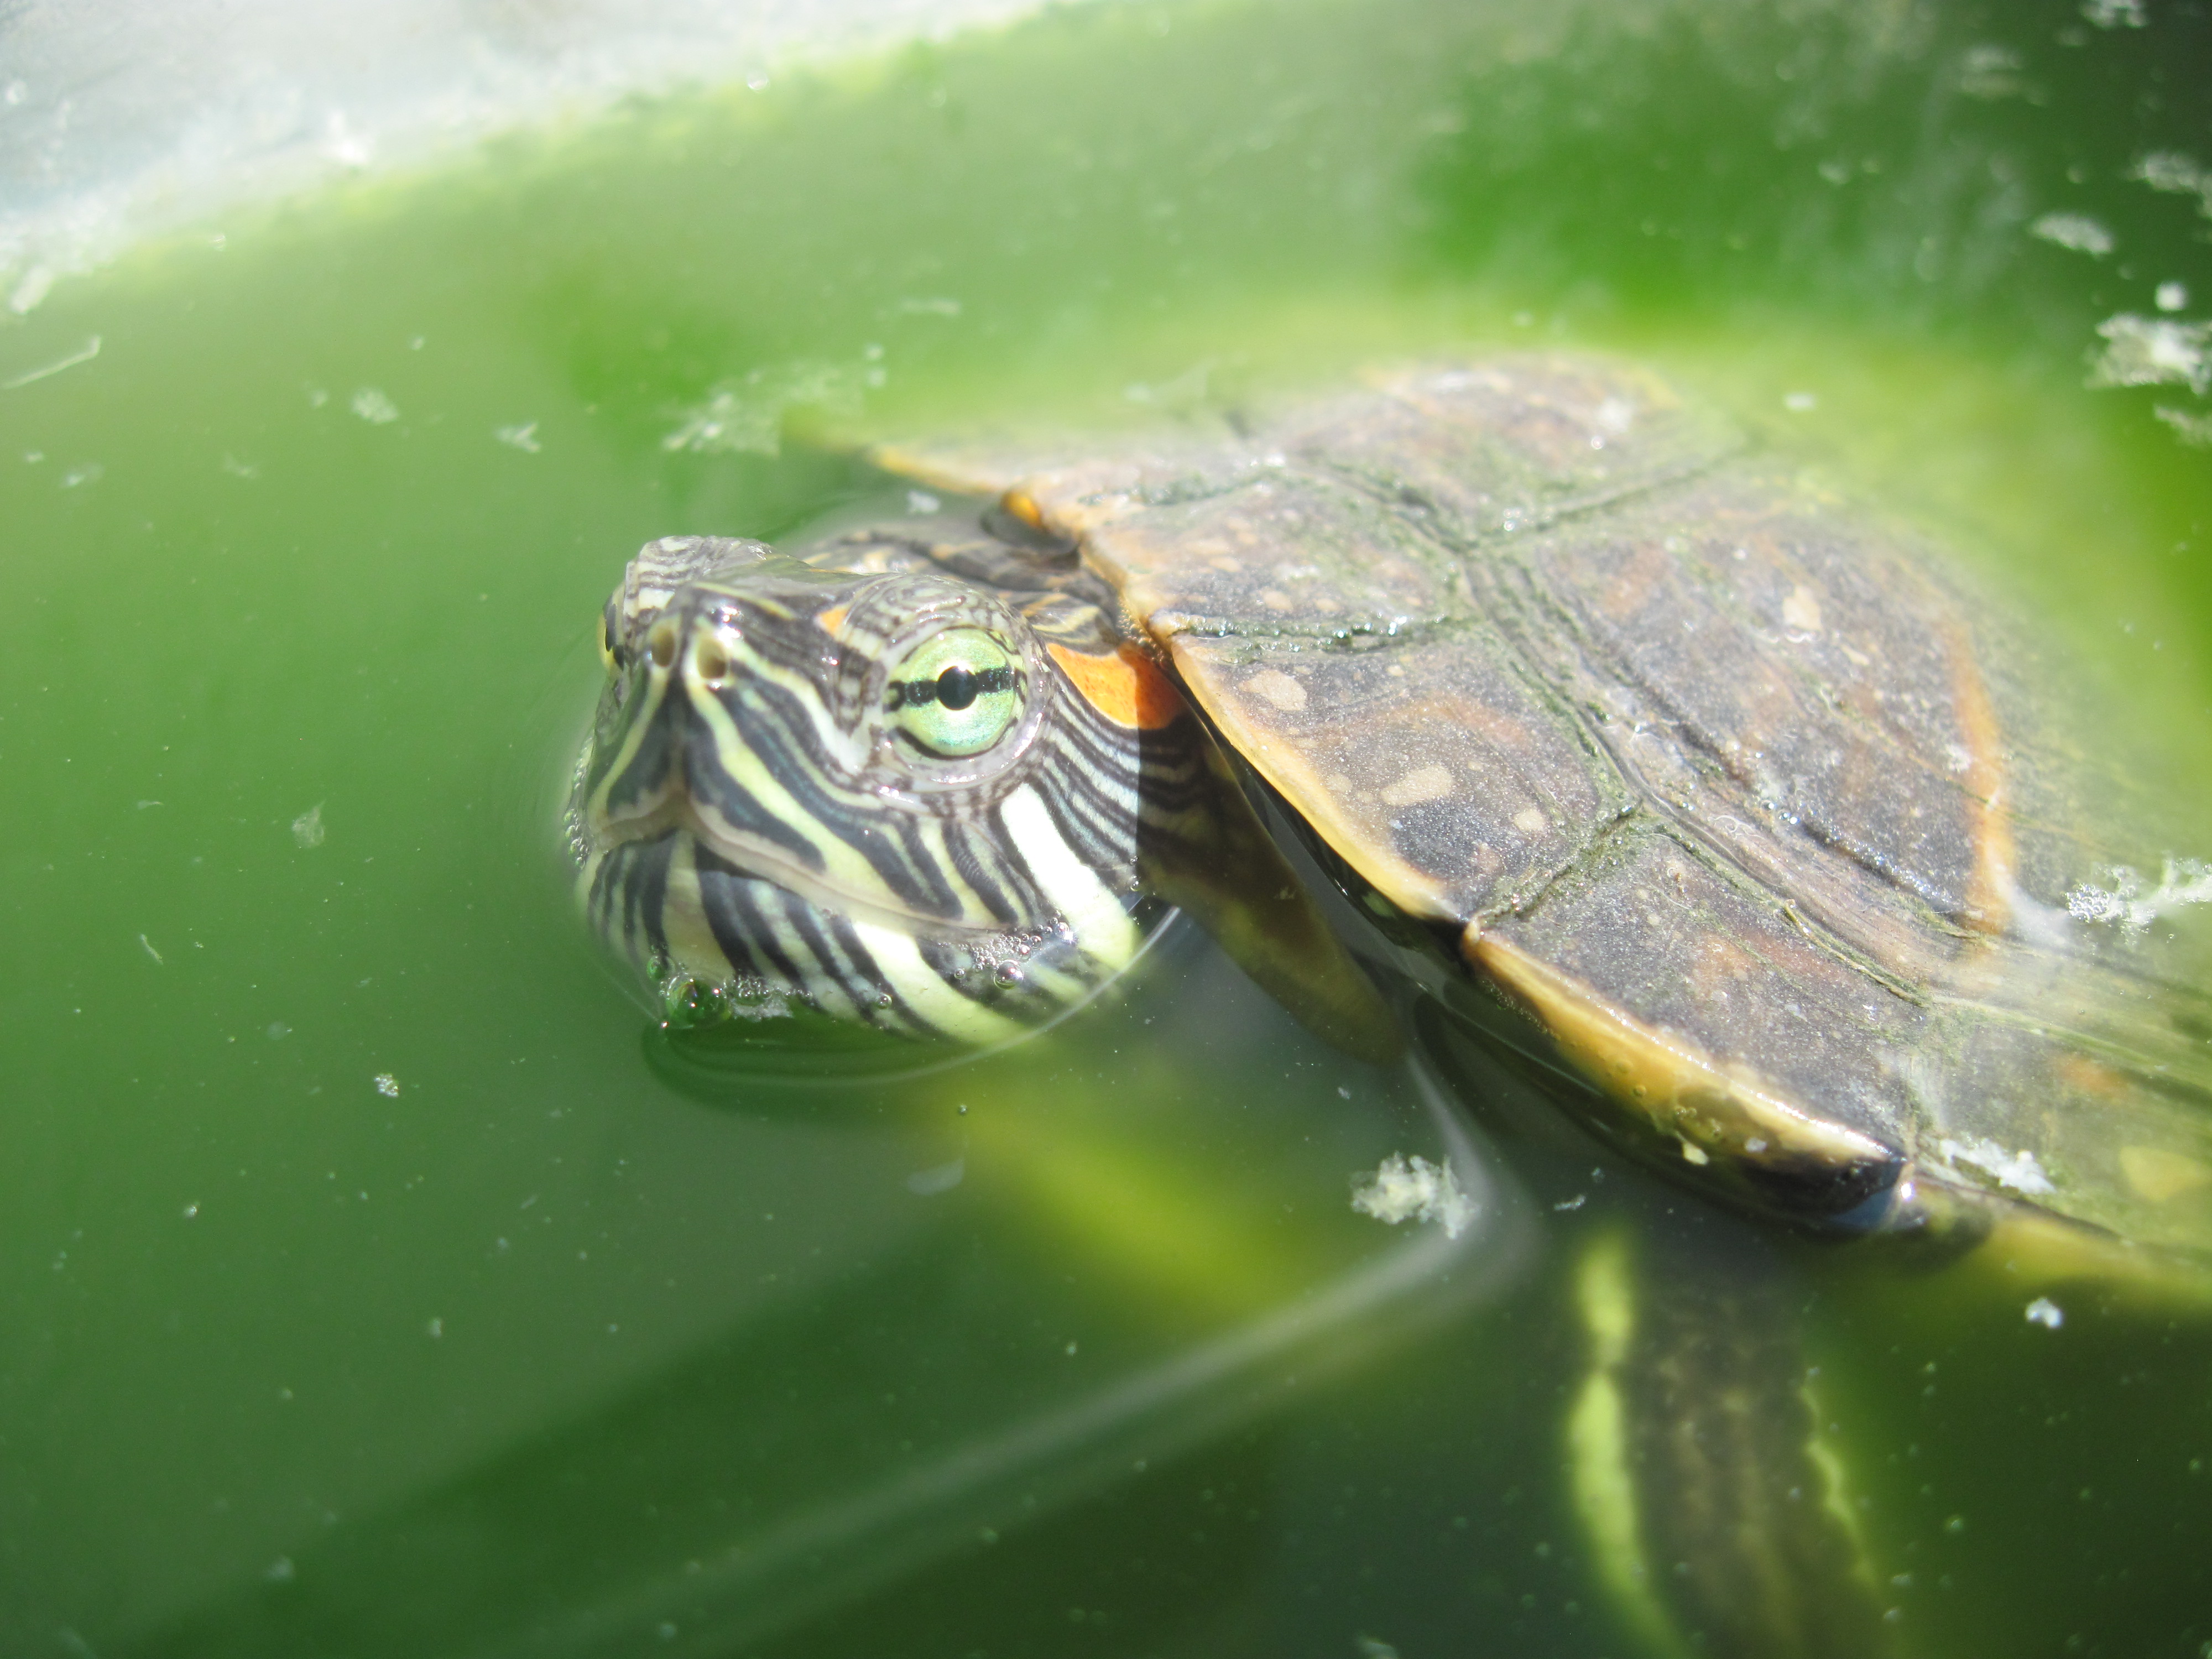 Turtle pet close-up